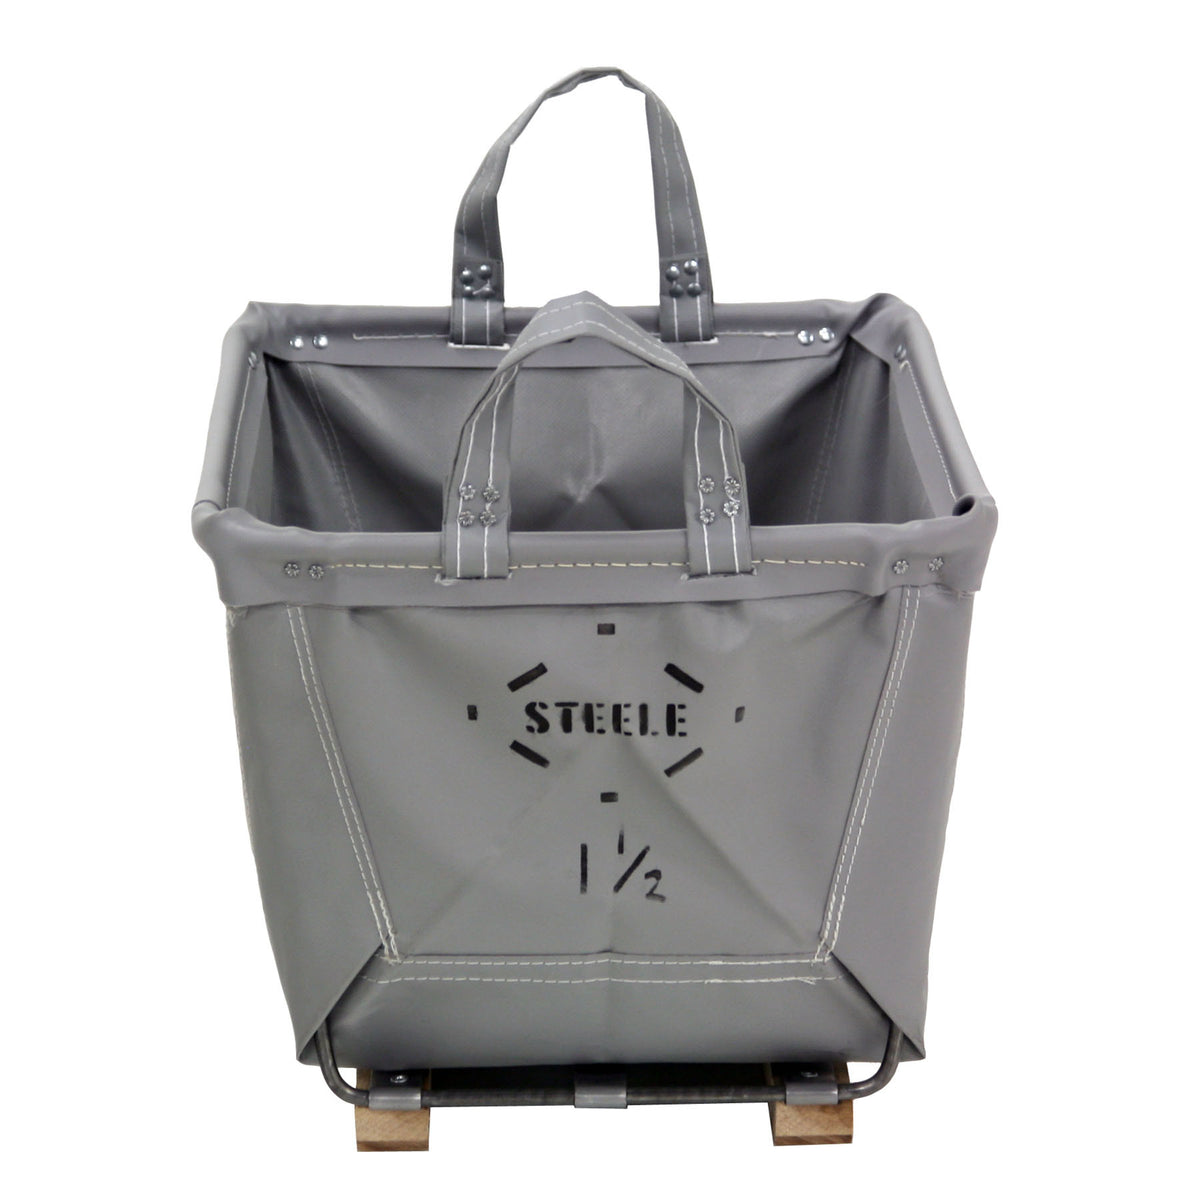 Steeletex Small Carry Basket - 1.5 Bu